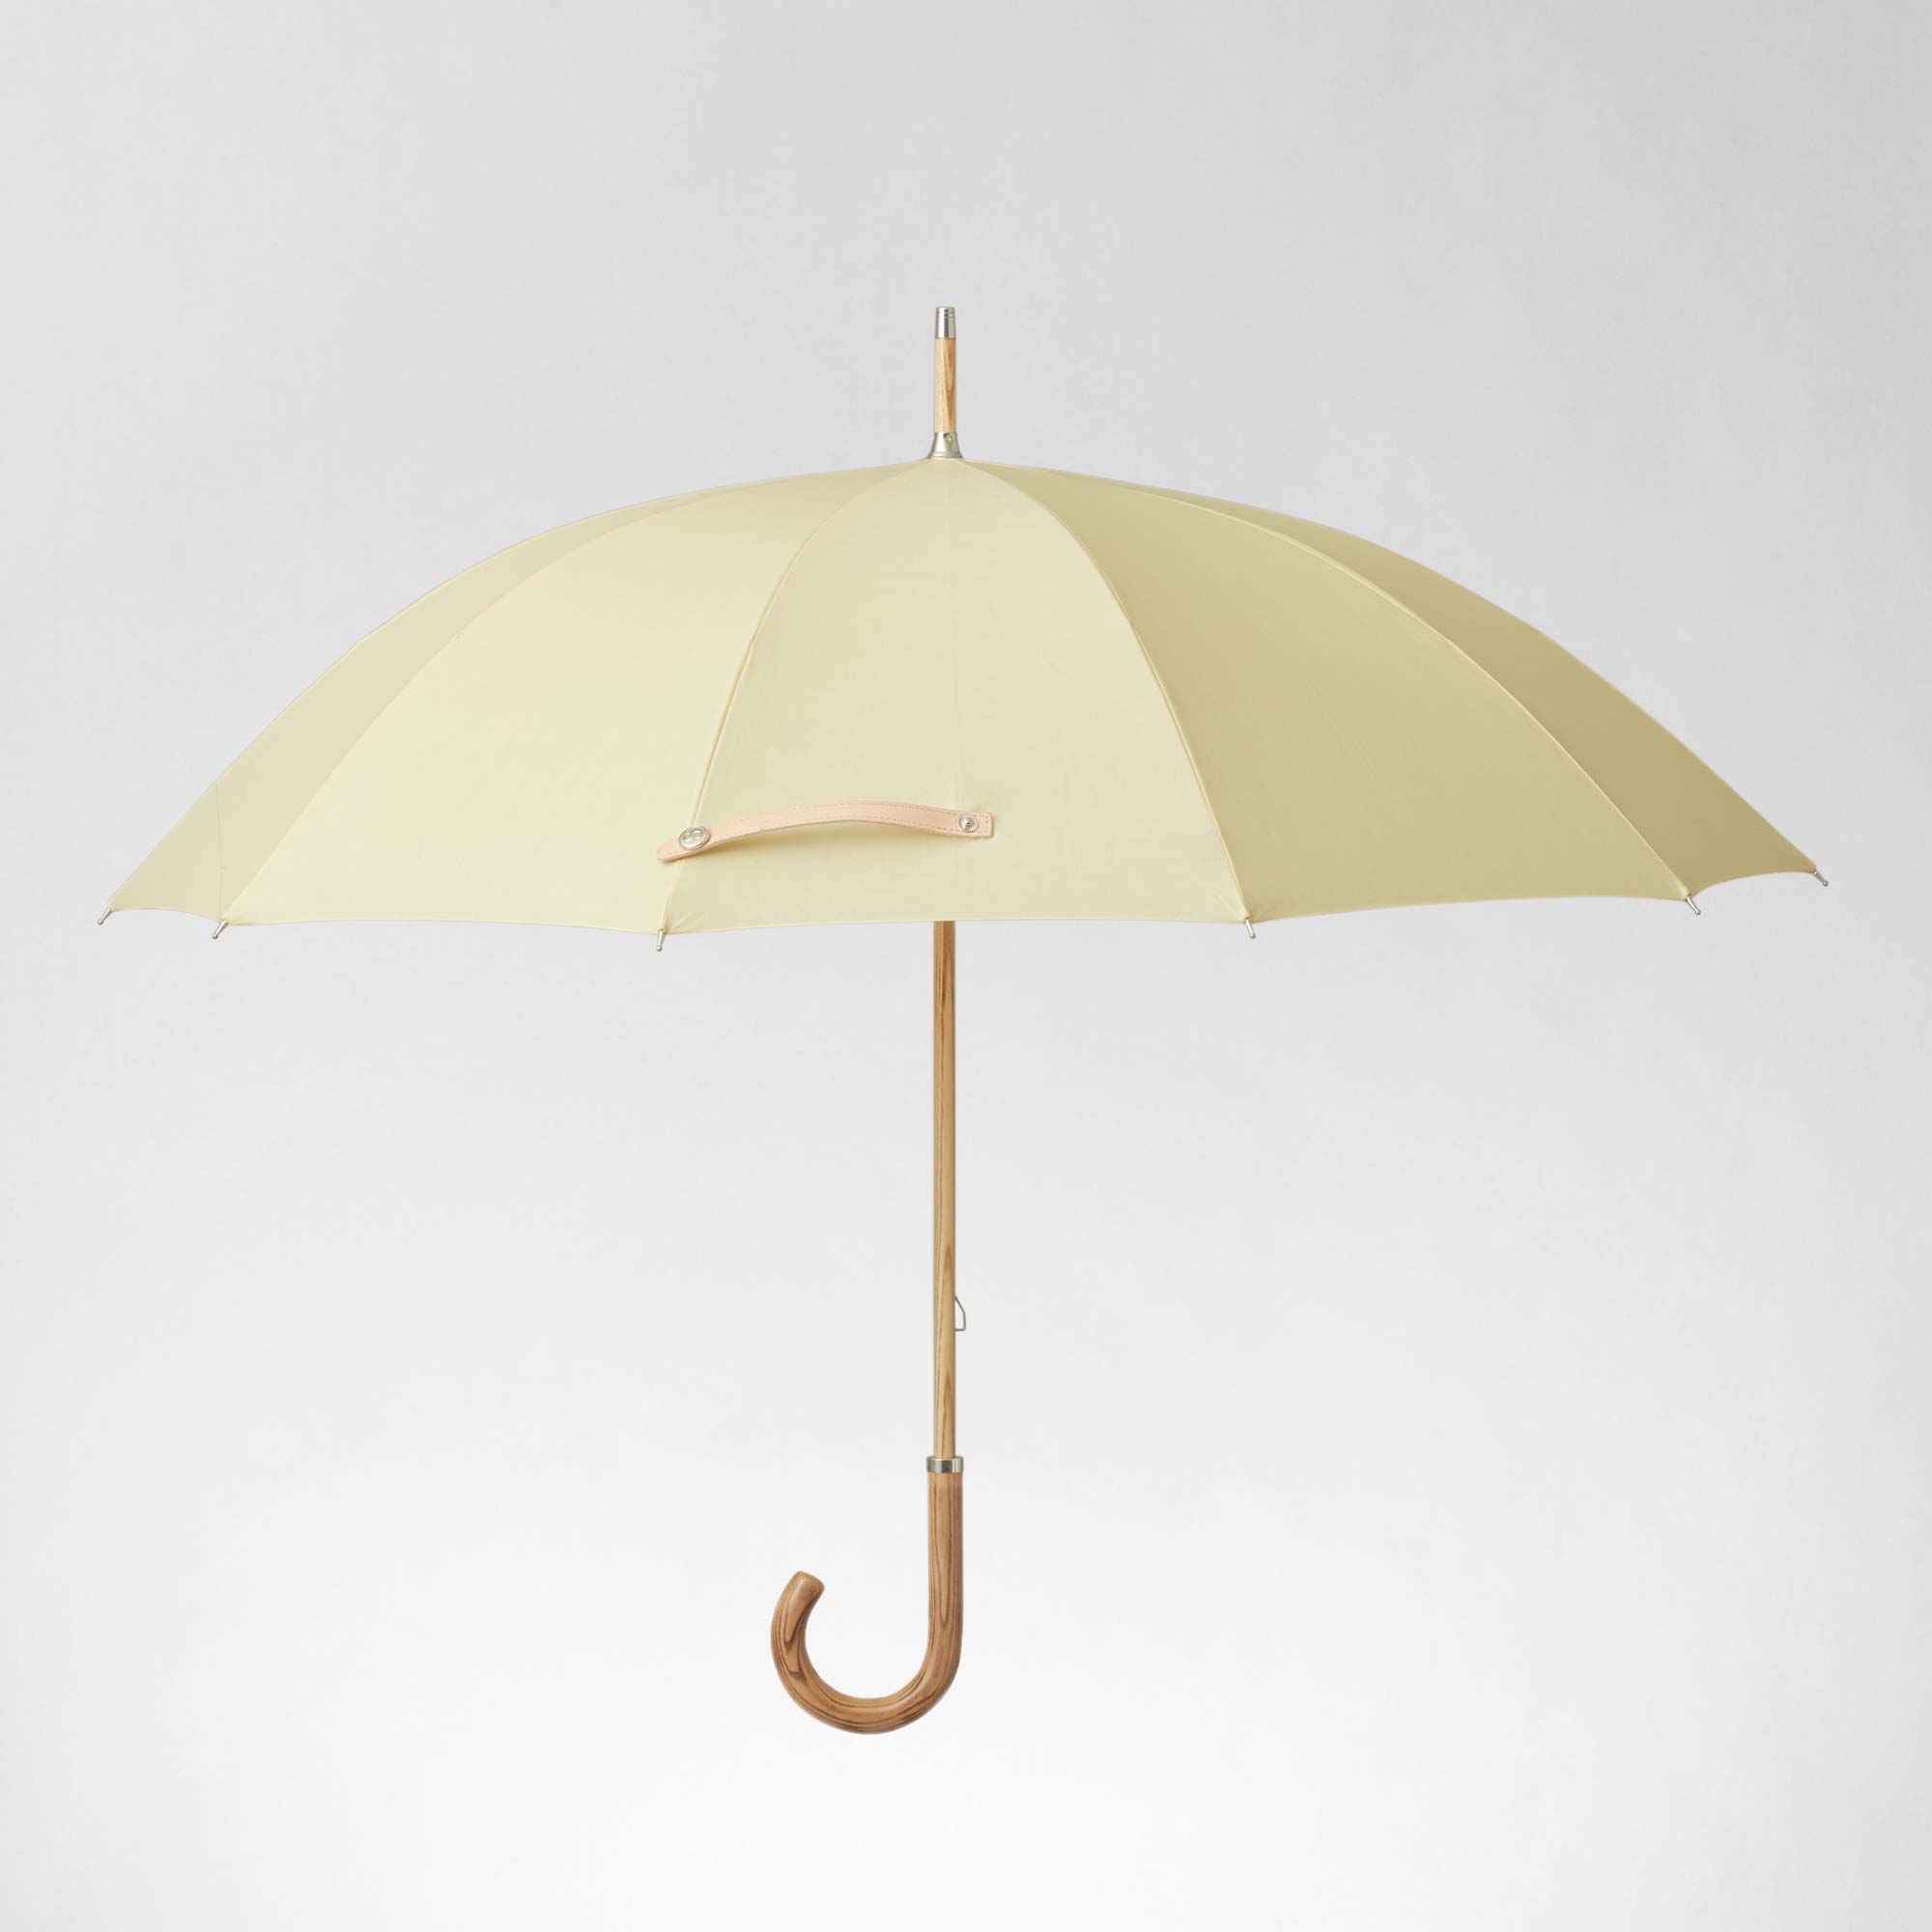 A high quality classic yellow umbrella